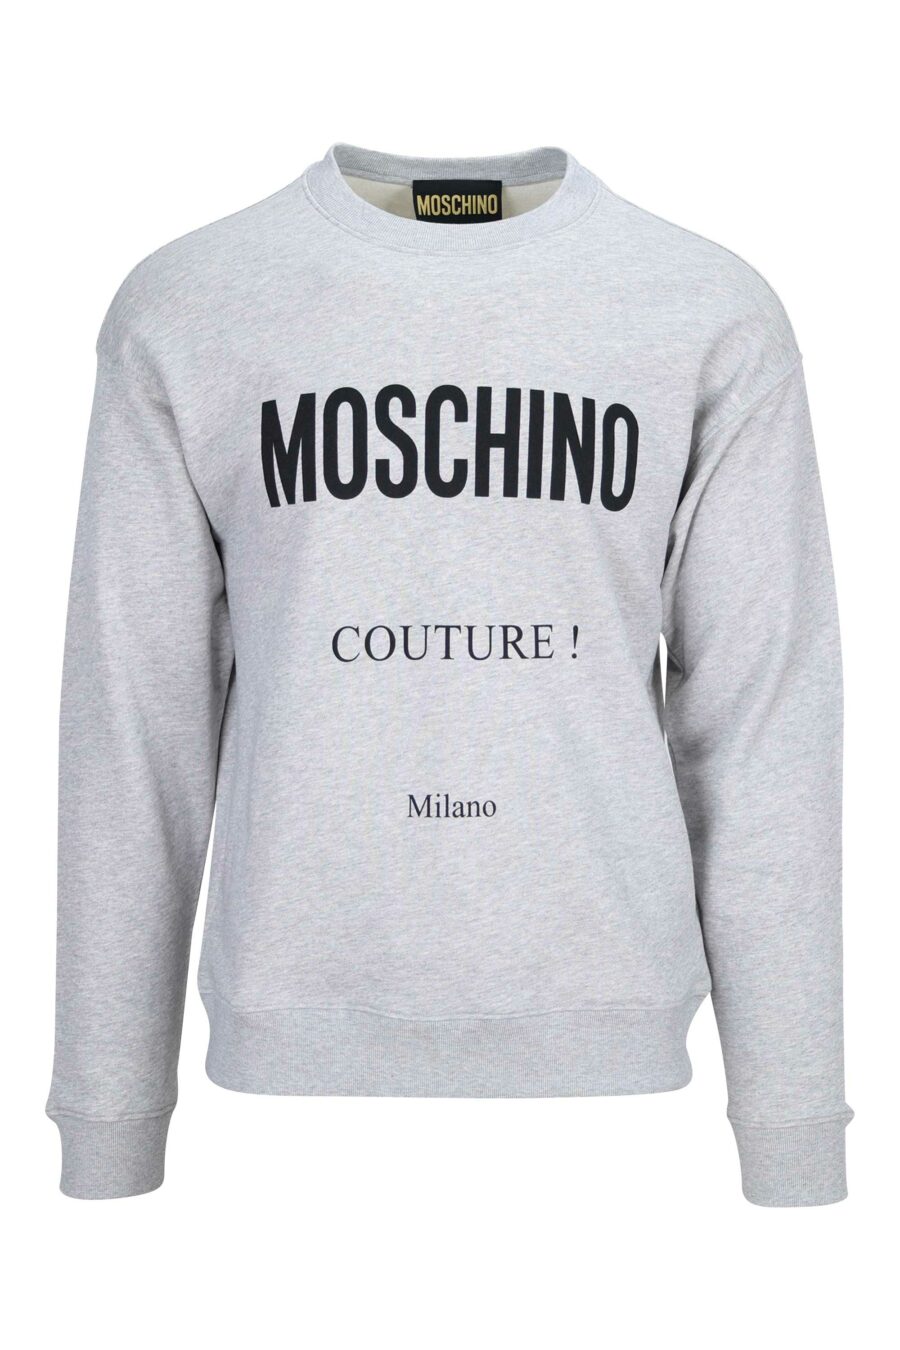 Graues Sweatshirt mit Maxilogue "couture milano" - 889316944785